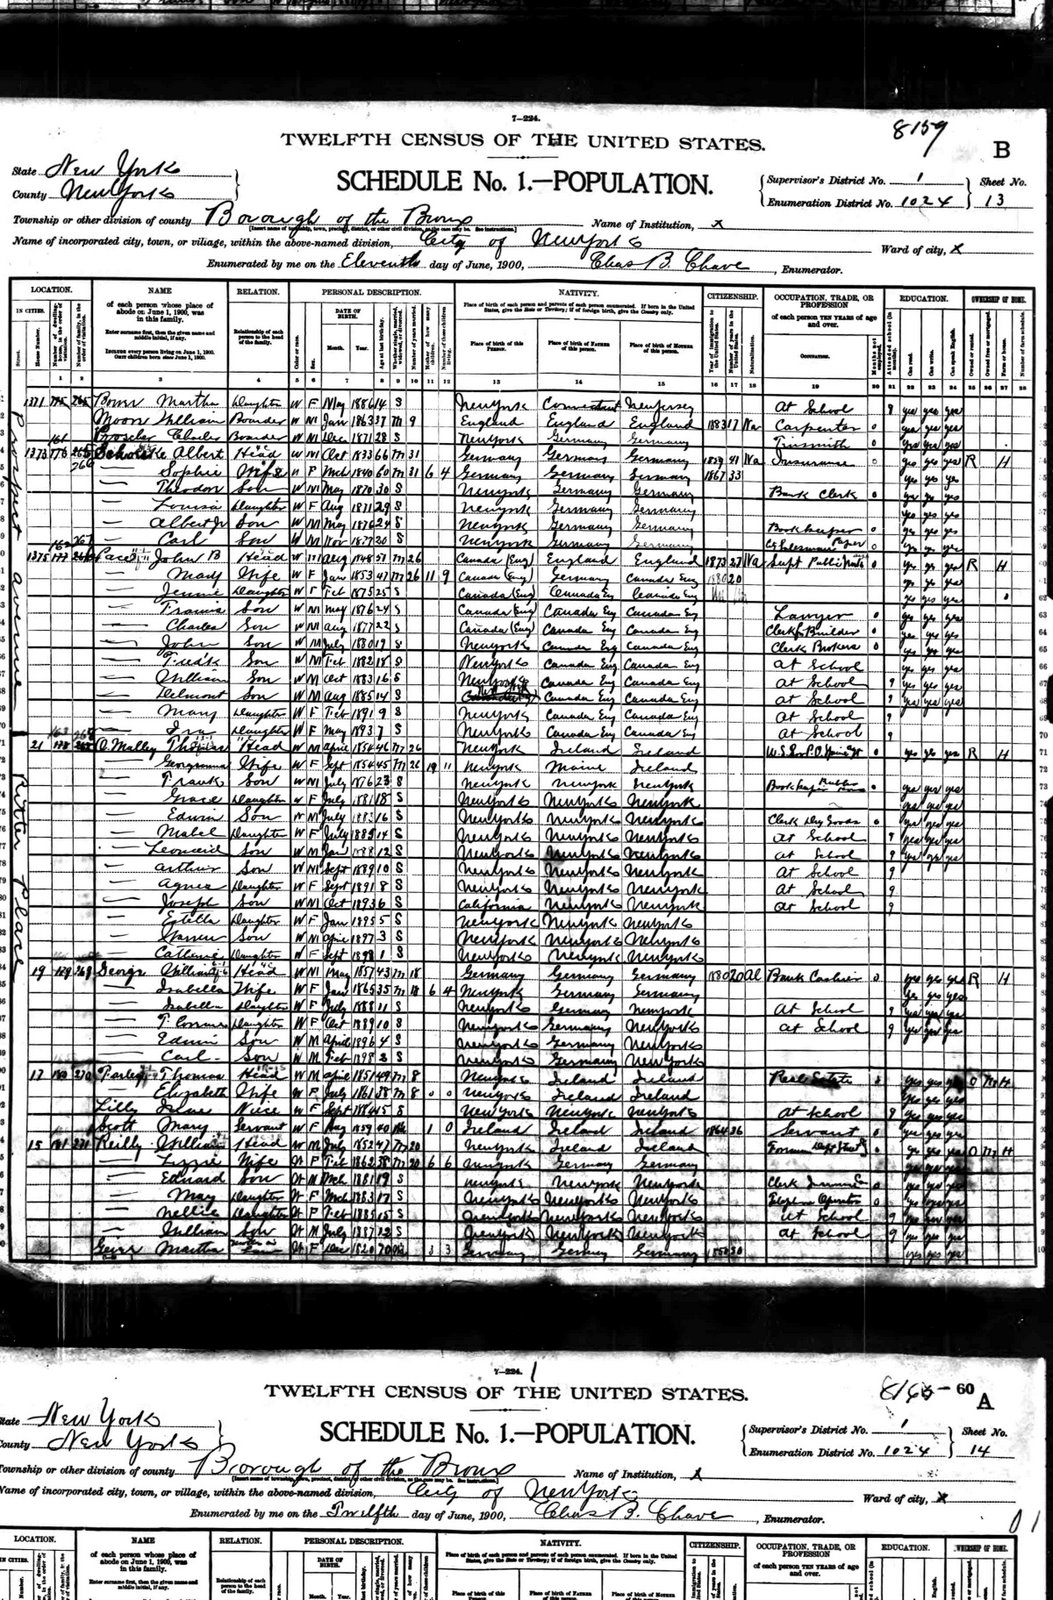 [1900_census_O'Malley_Reynolds.jpg]